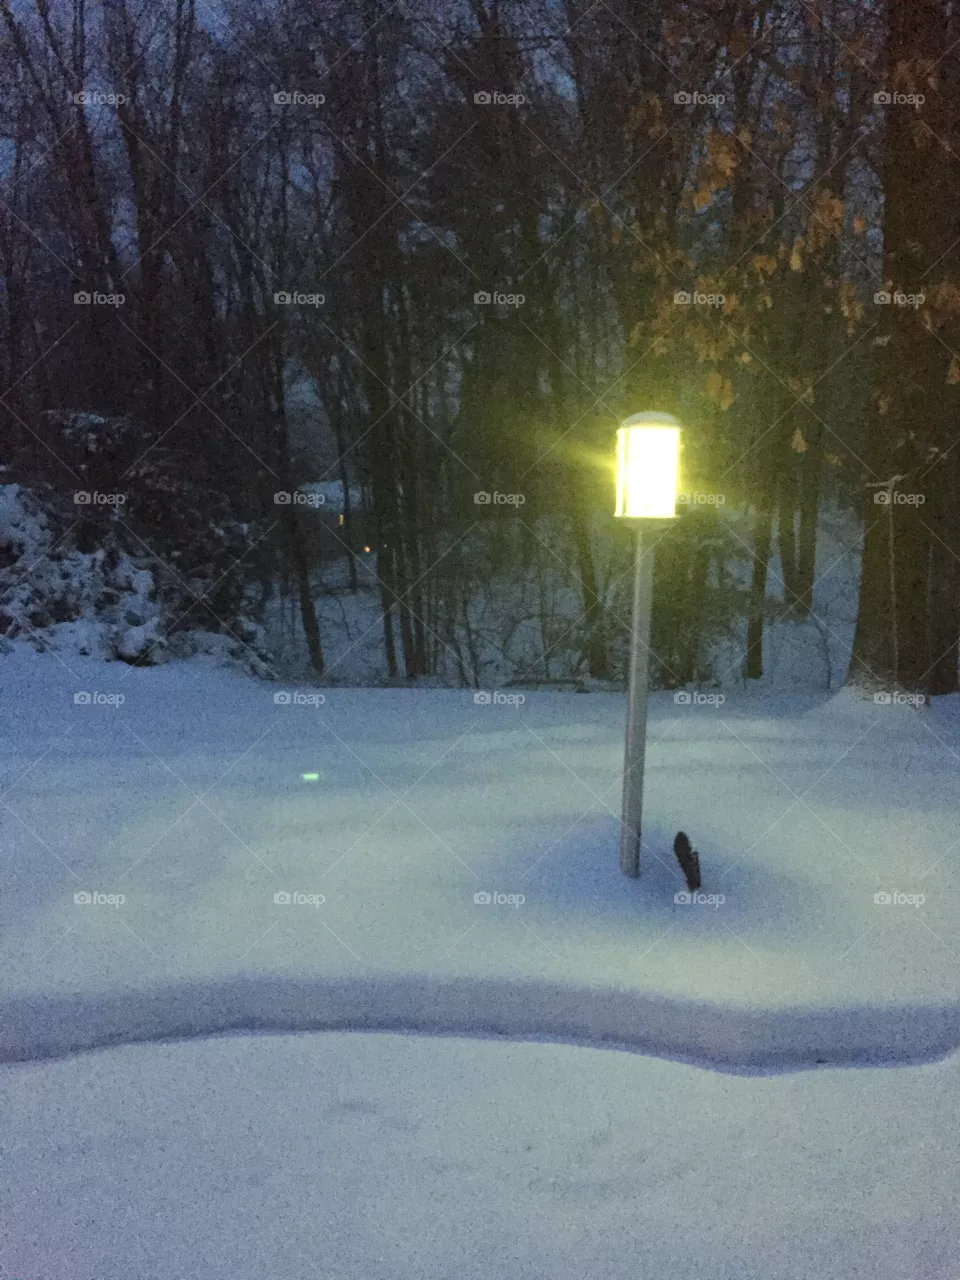 Snowy lamp